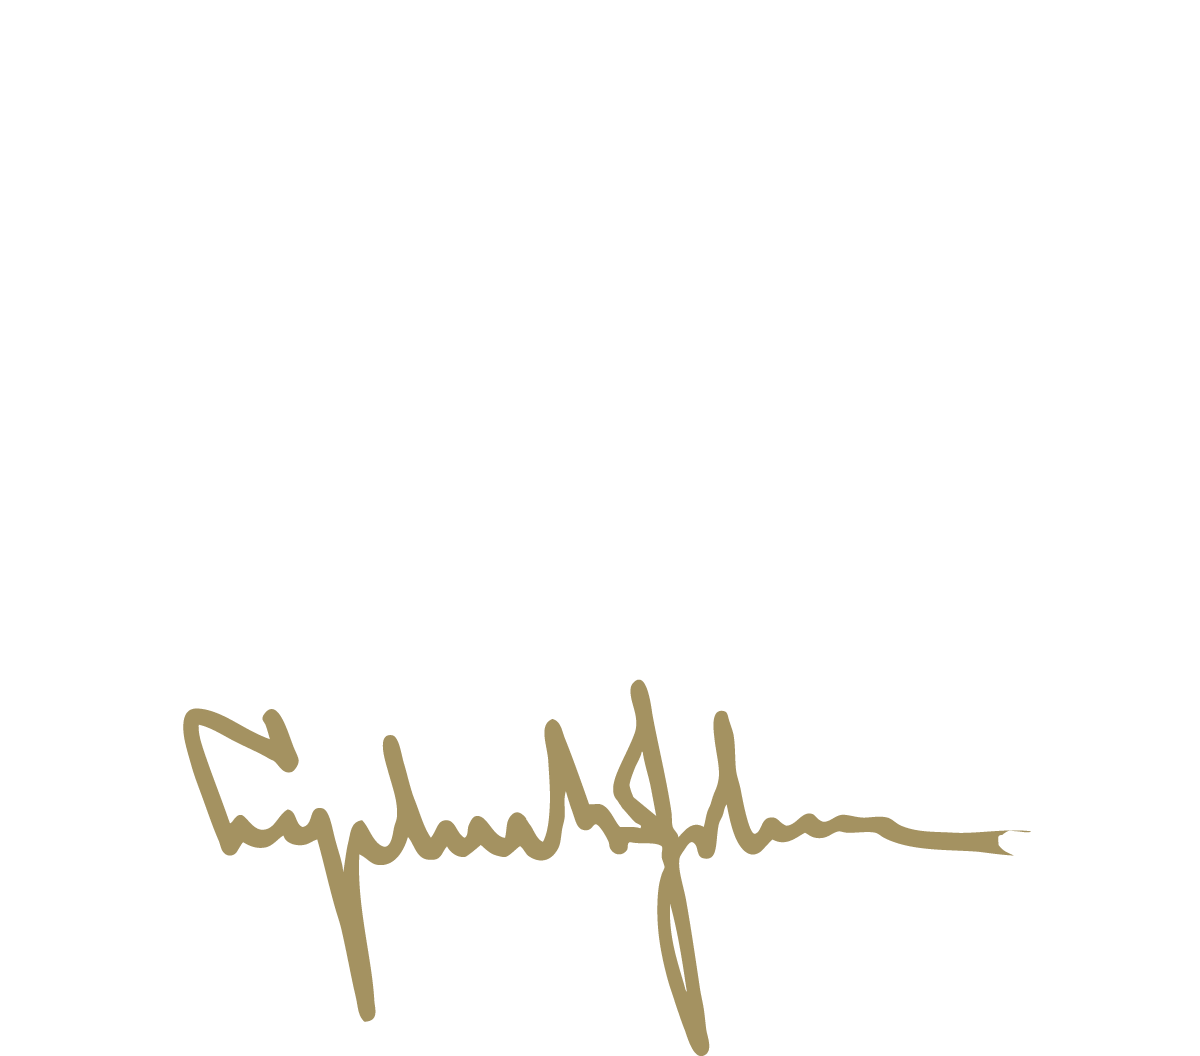 LBJ Foundation